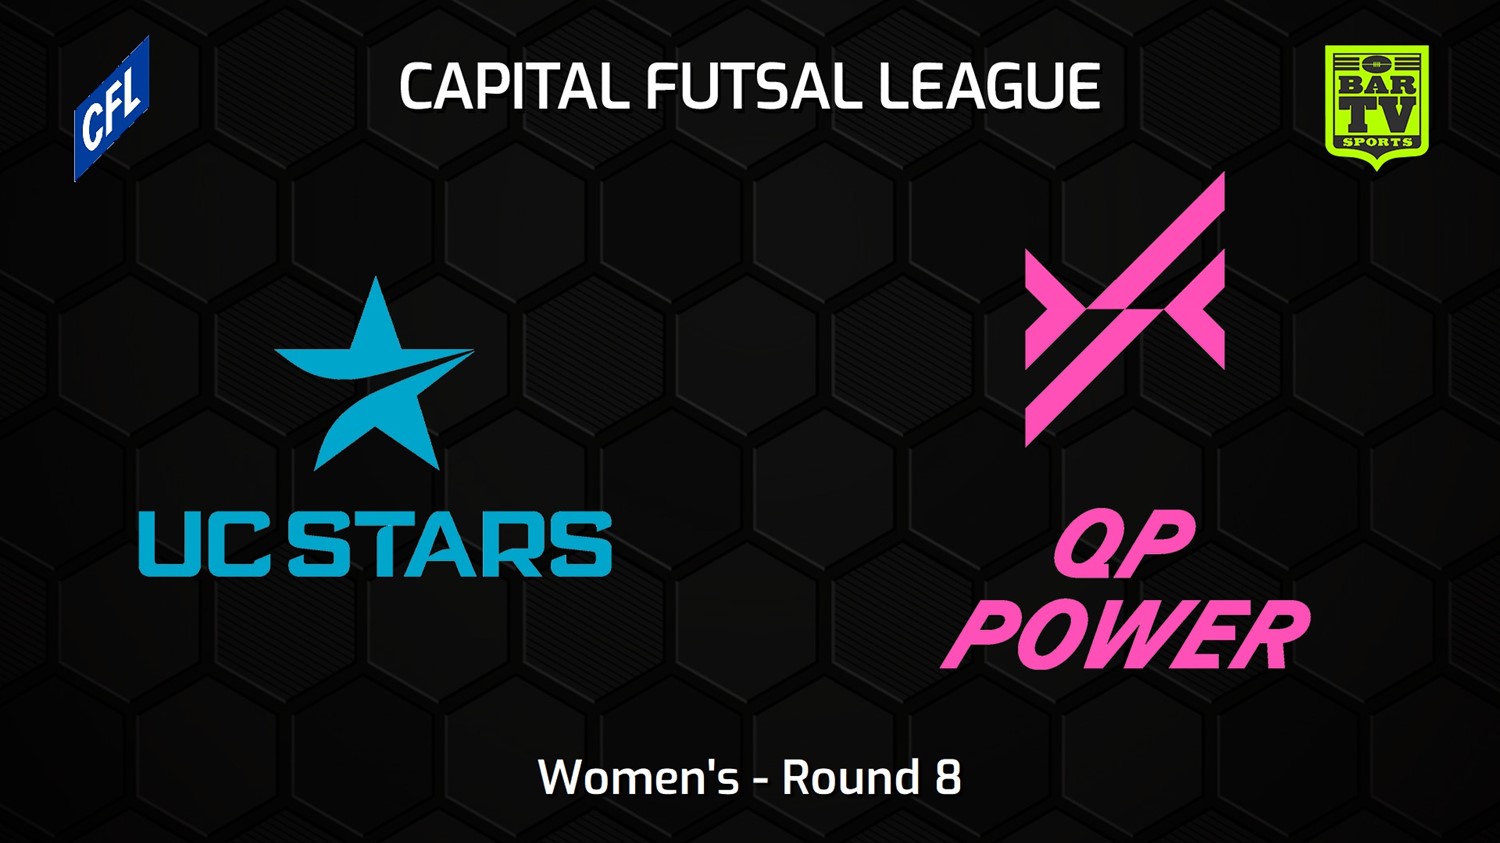 231210-Capital Football Futsal Round 8 - Women's - UC Stars FC v Queanbeyan-Palerang Power Minigame Slate Image